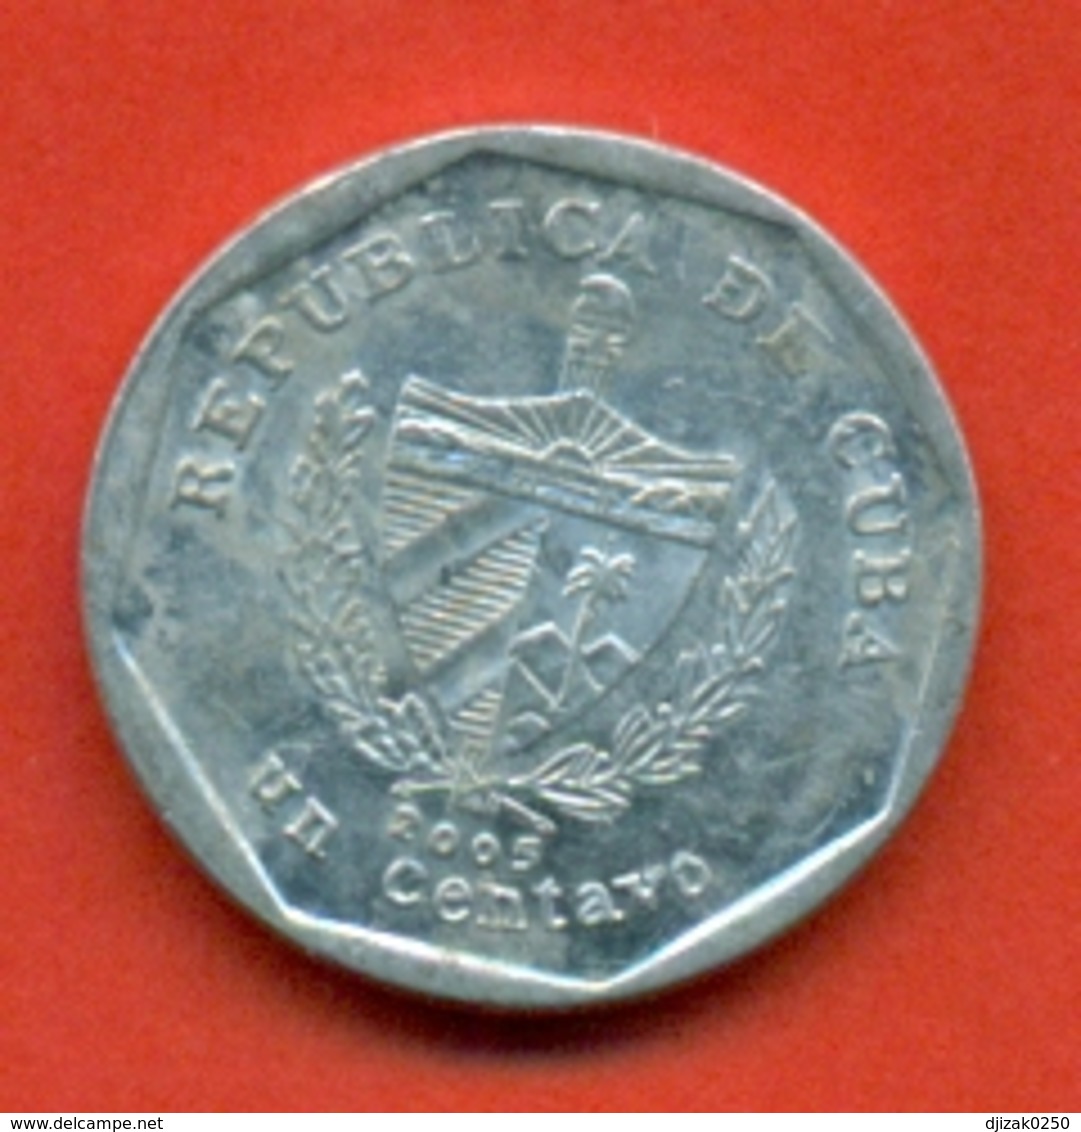 Cuba 2005. Intur. 1 Centavo. Aluminium. - Cuba